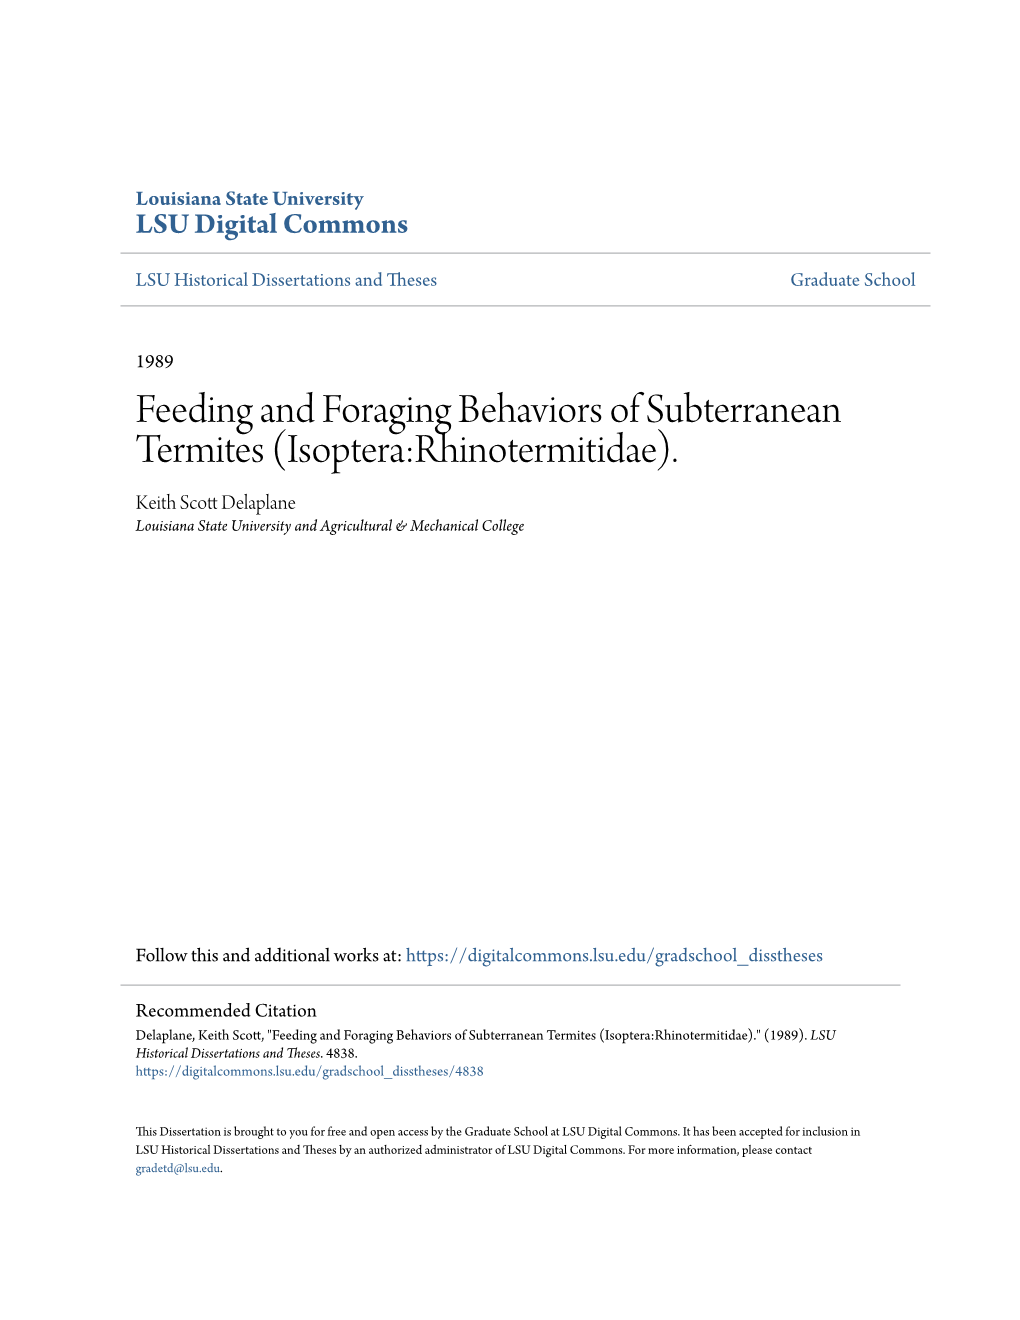 Feeding and Foraging Behaviors of Subterranean Termites (Isoptera:Rhinotermitidae)